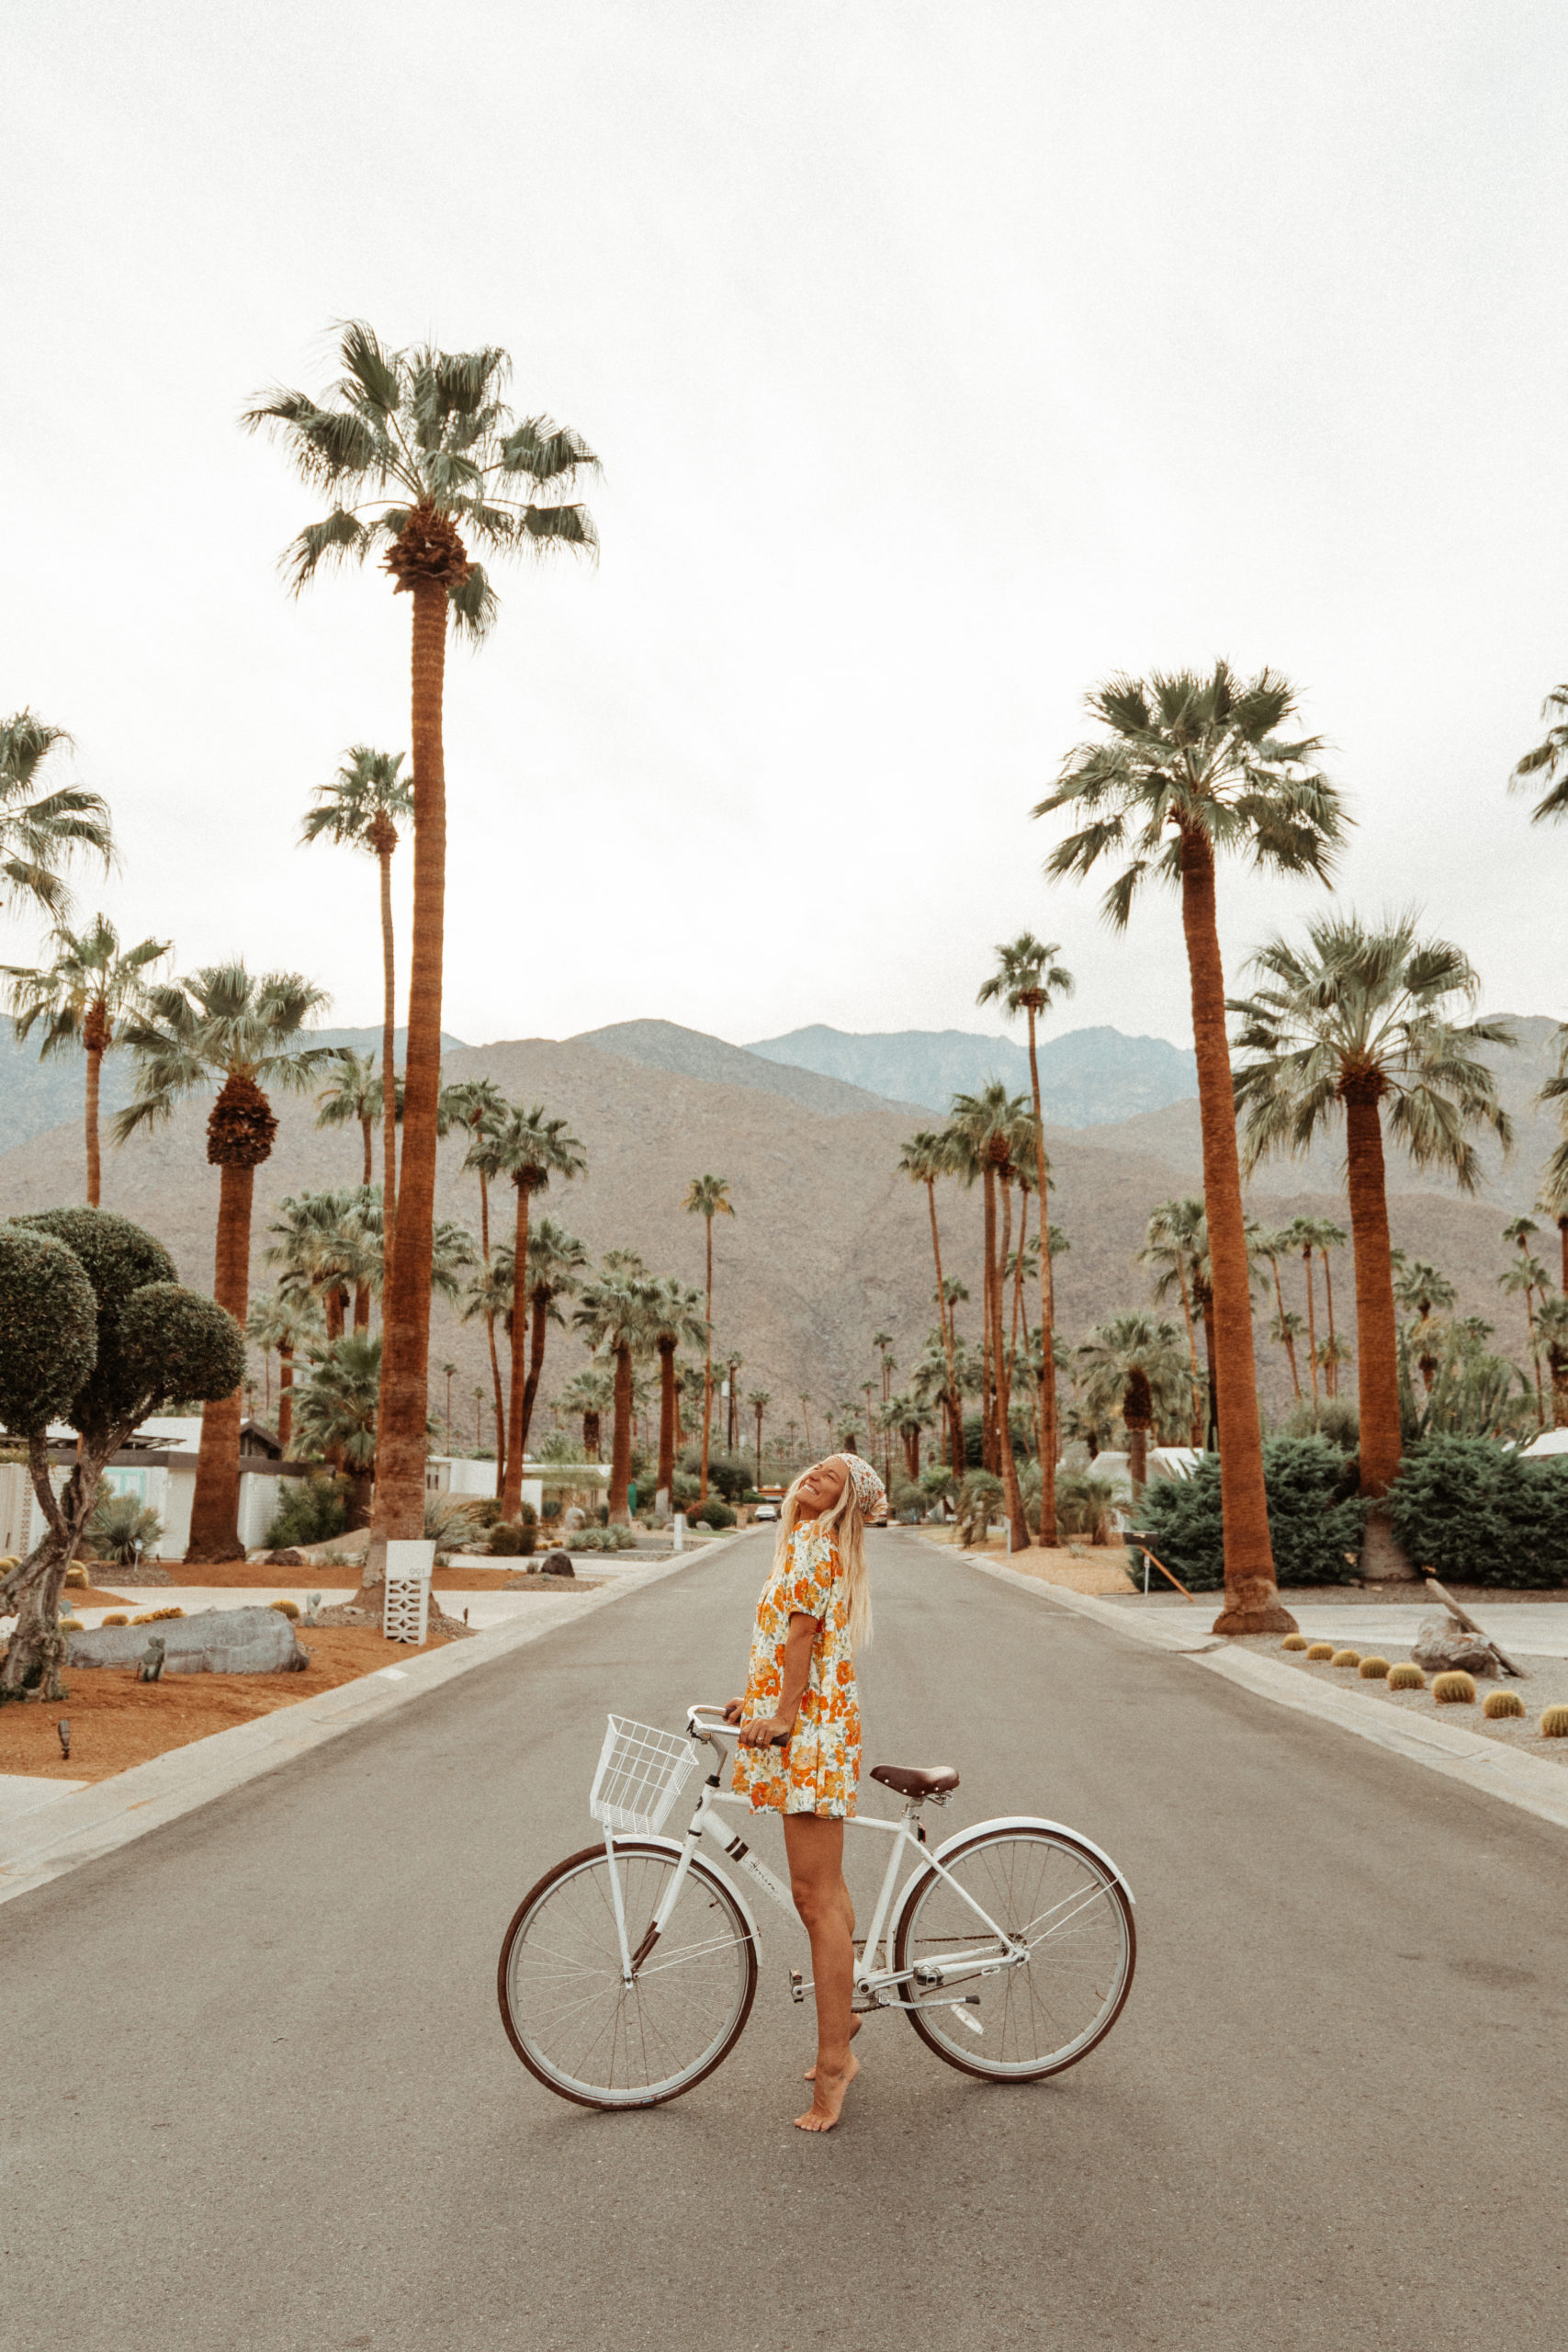 Sarah on her bike in Palm Springs Indian Canyons neighbourhood